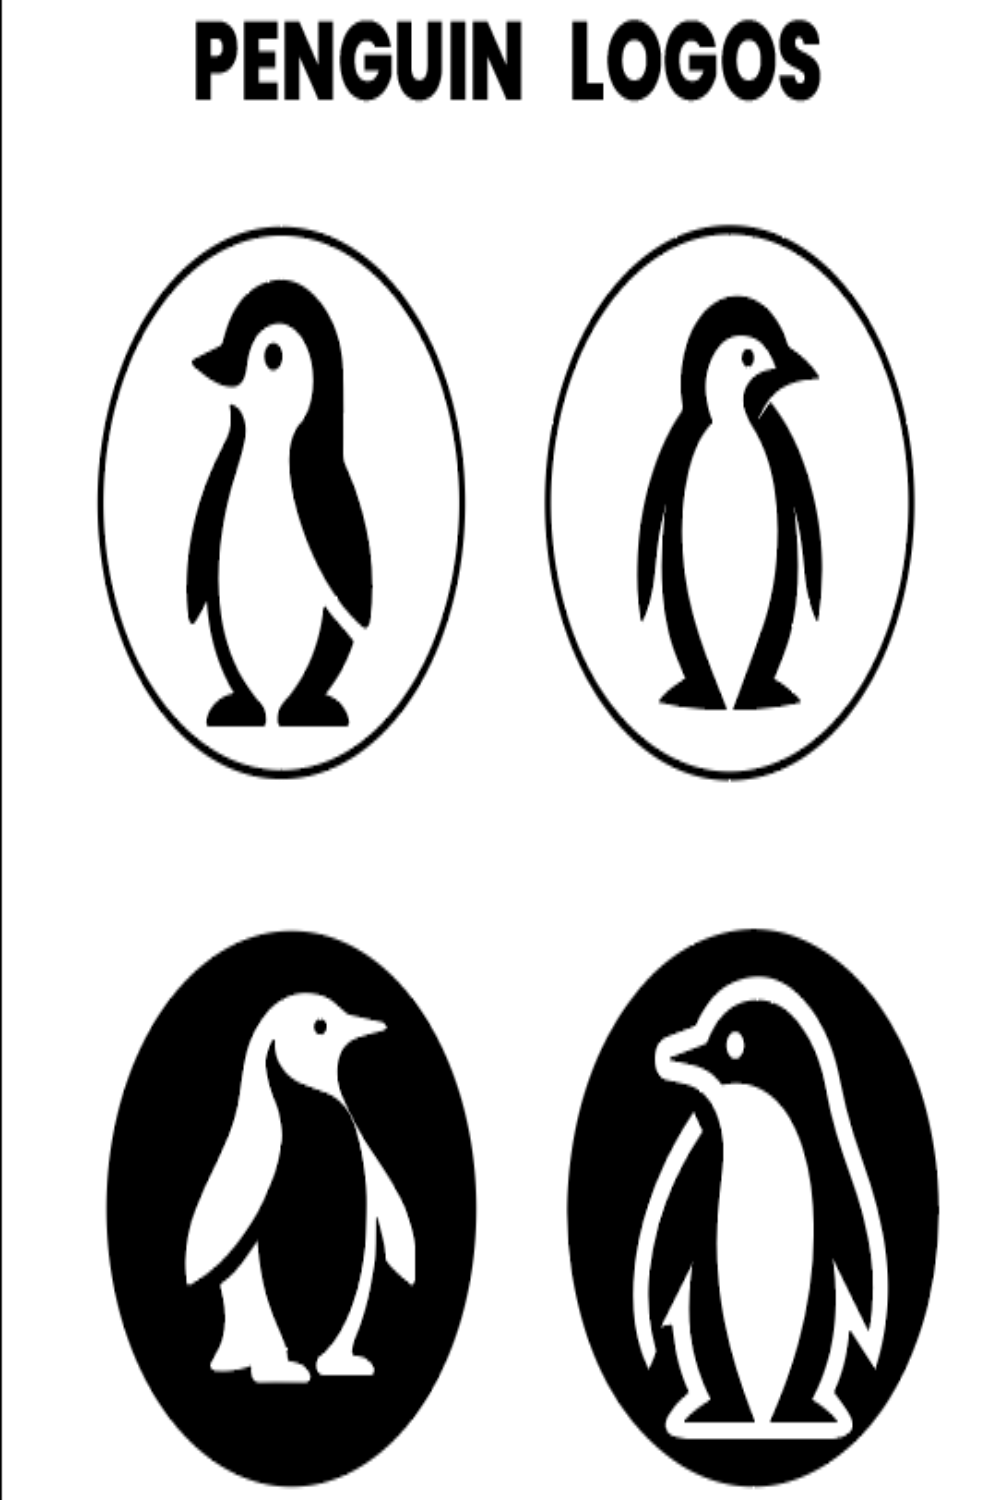 penguin logos pinterest preview image.